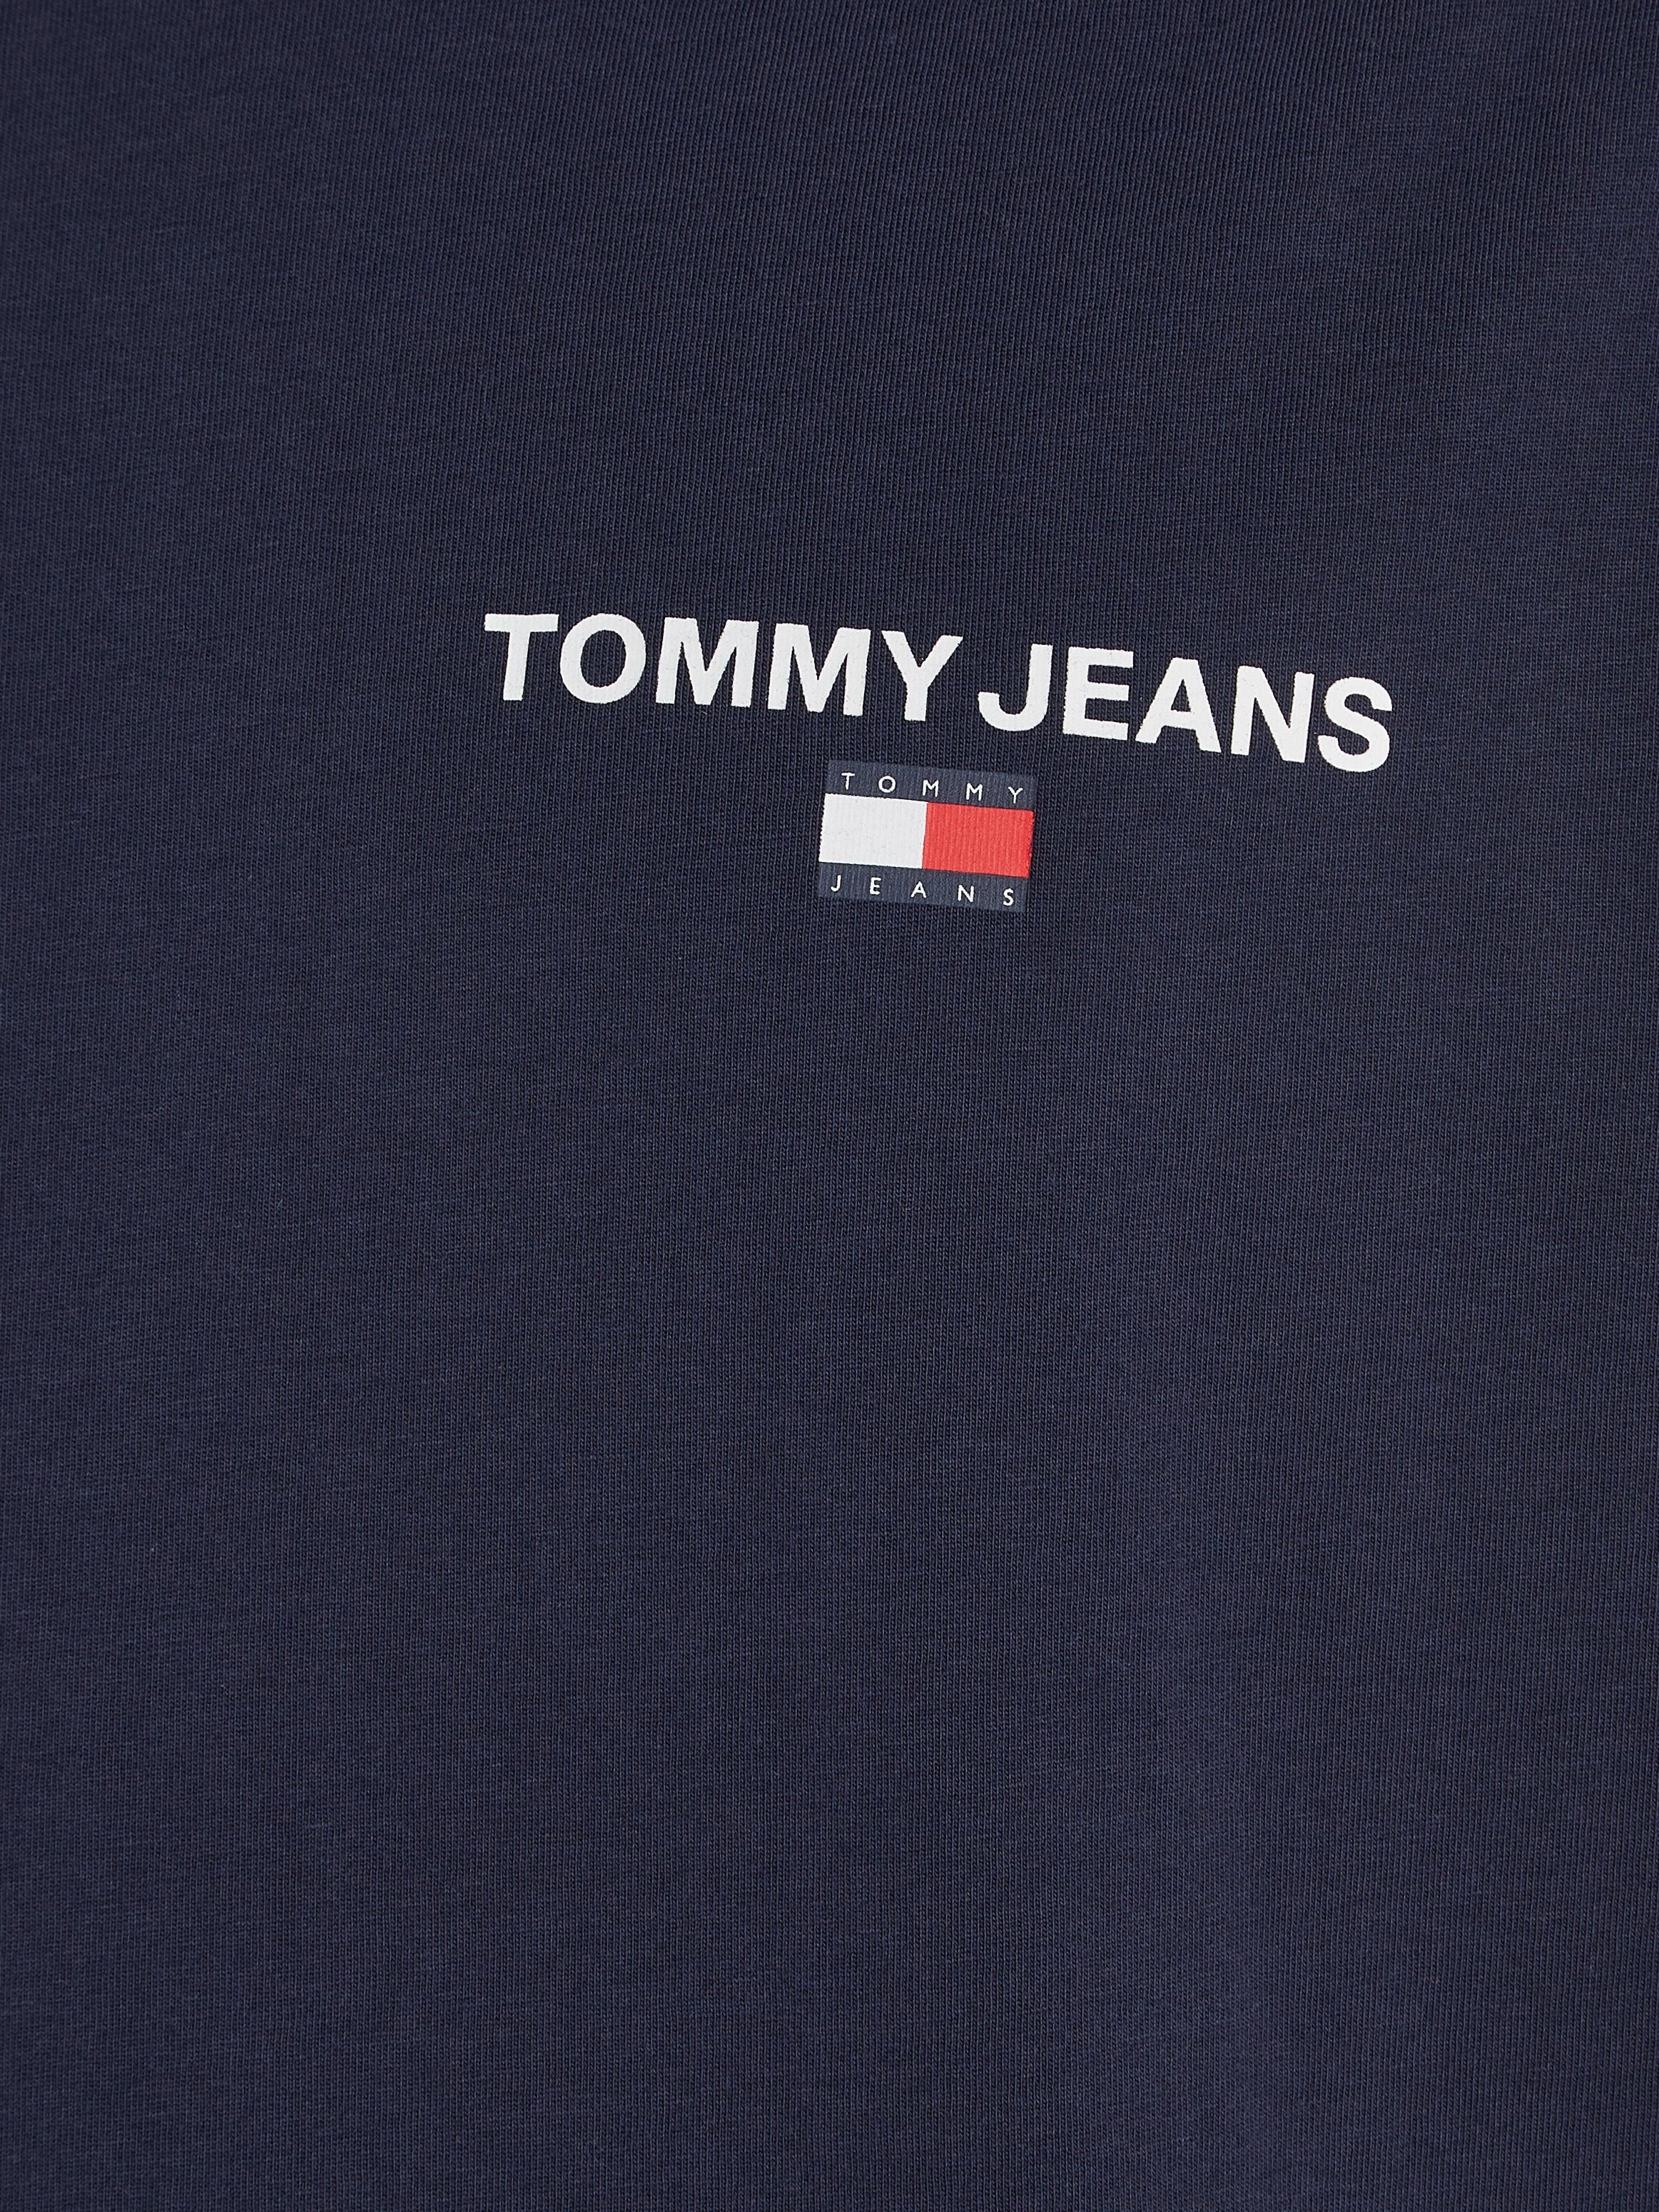 PRINT LINEAR Twilight Navy TEE BACK TJM CLSC Tommy Jeans T-Shirt